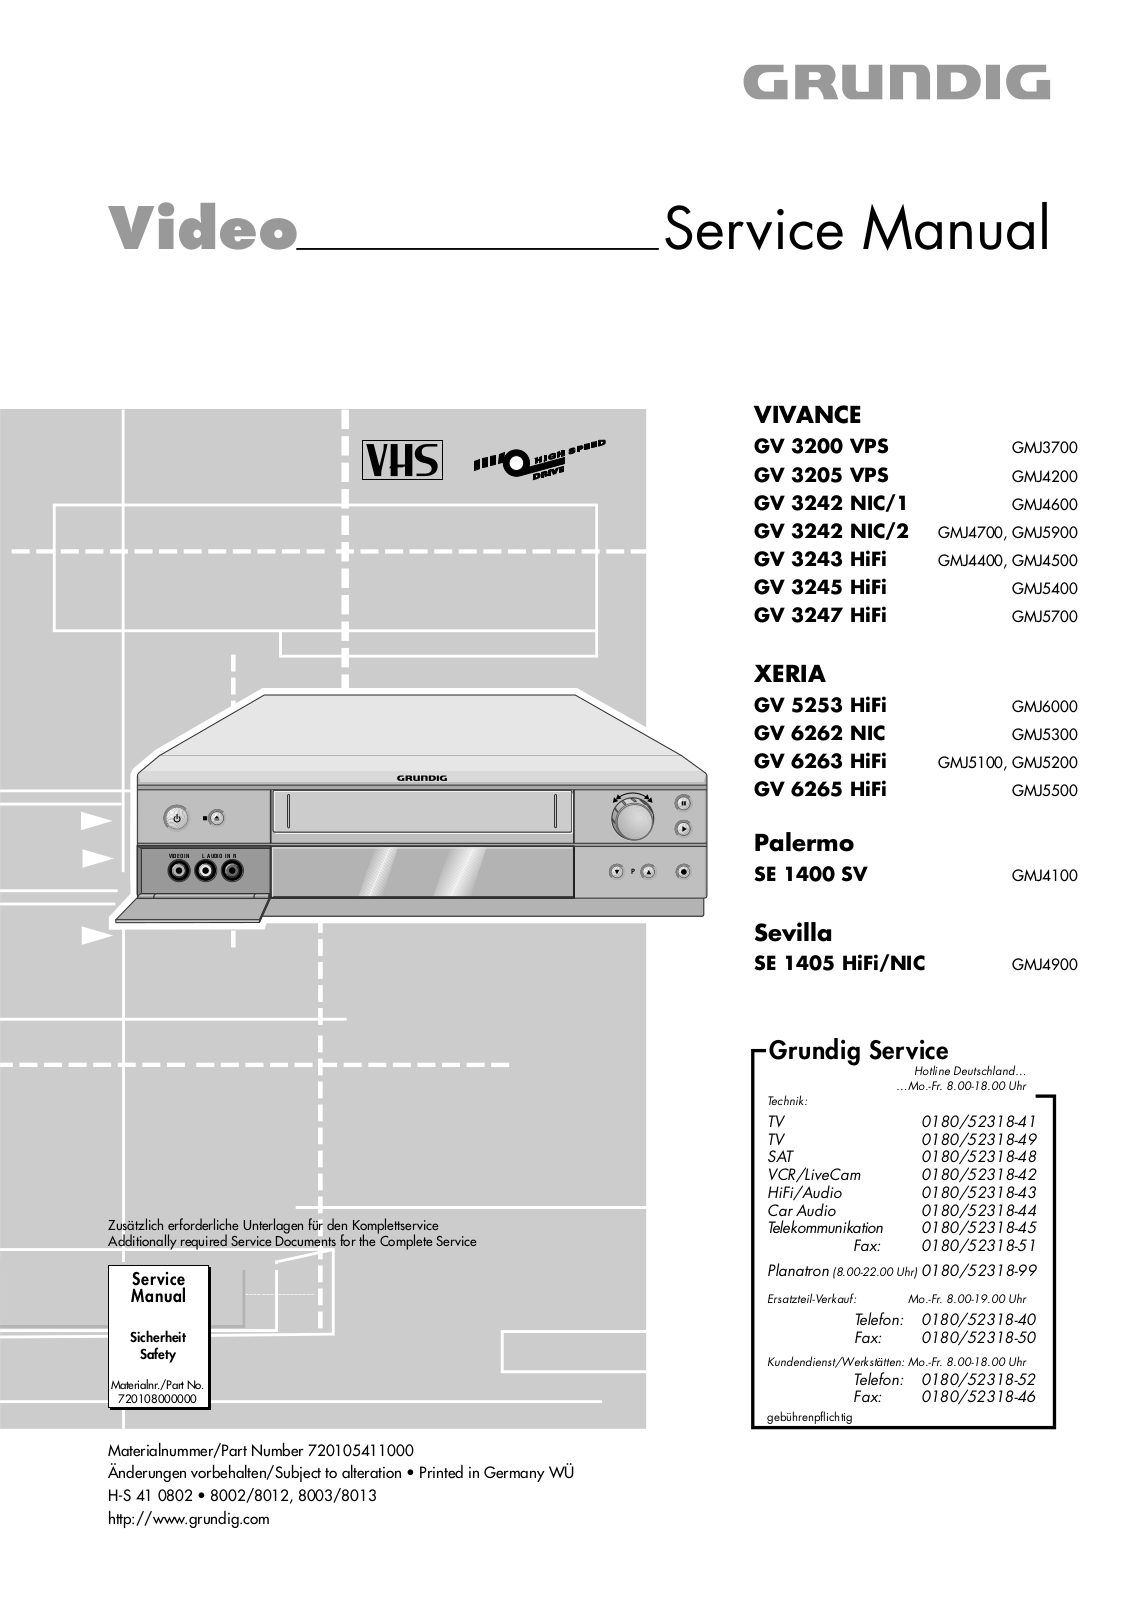 Grundig GV 3205 VPS, GV 3243 HiFi, GV 3242 NIC-2, GV 6263 HiFi, SE 1400 SV Service Manual